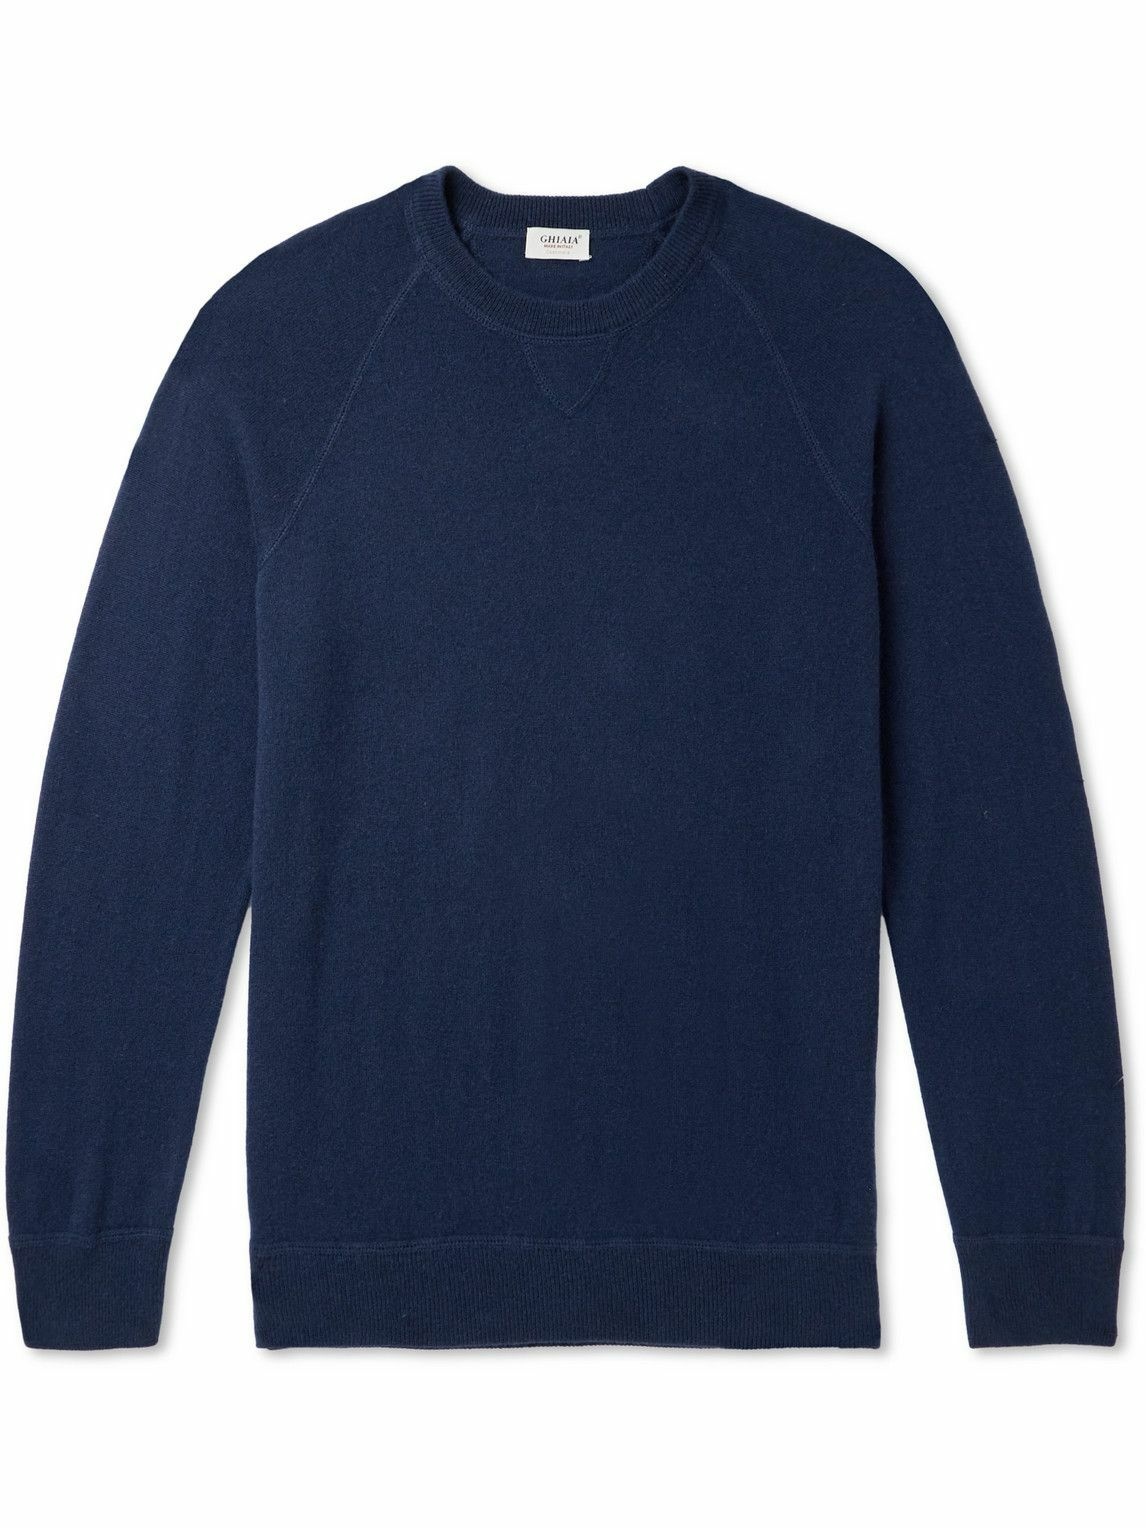 Ghiaia Cashmere - Cahsmere Sweater - Blue Ghiaia Cashmere